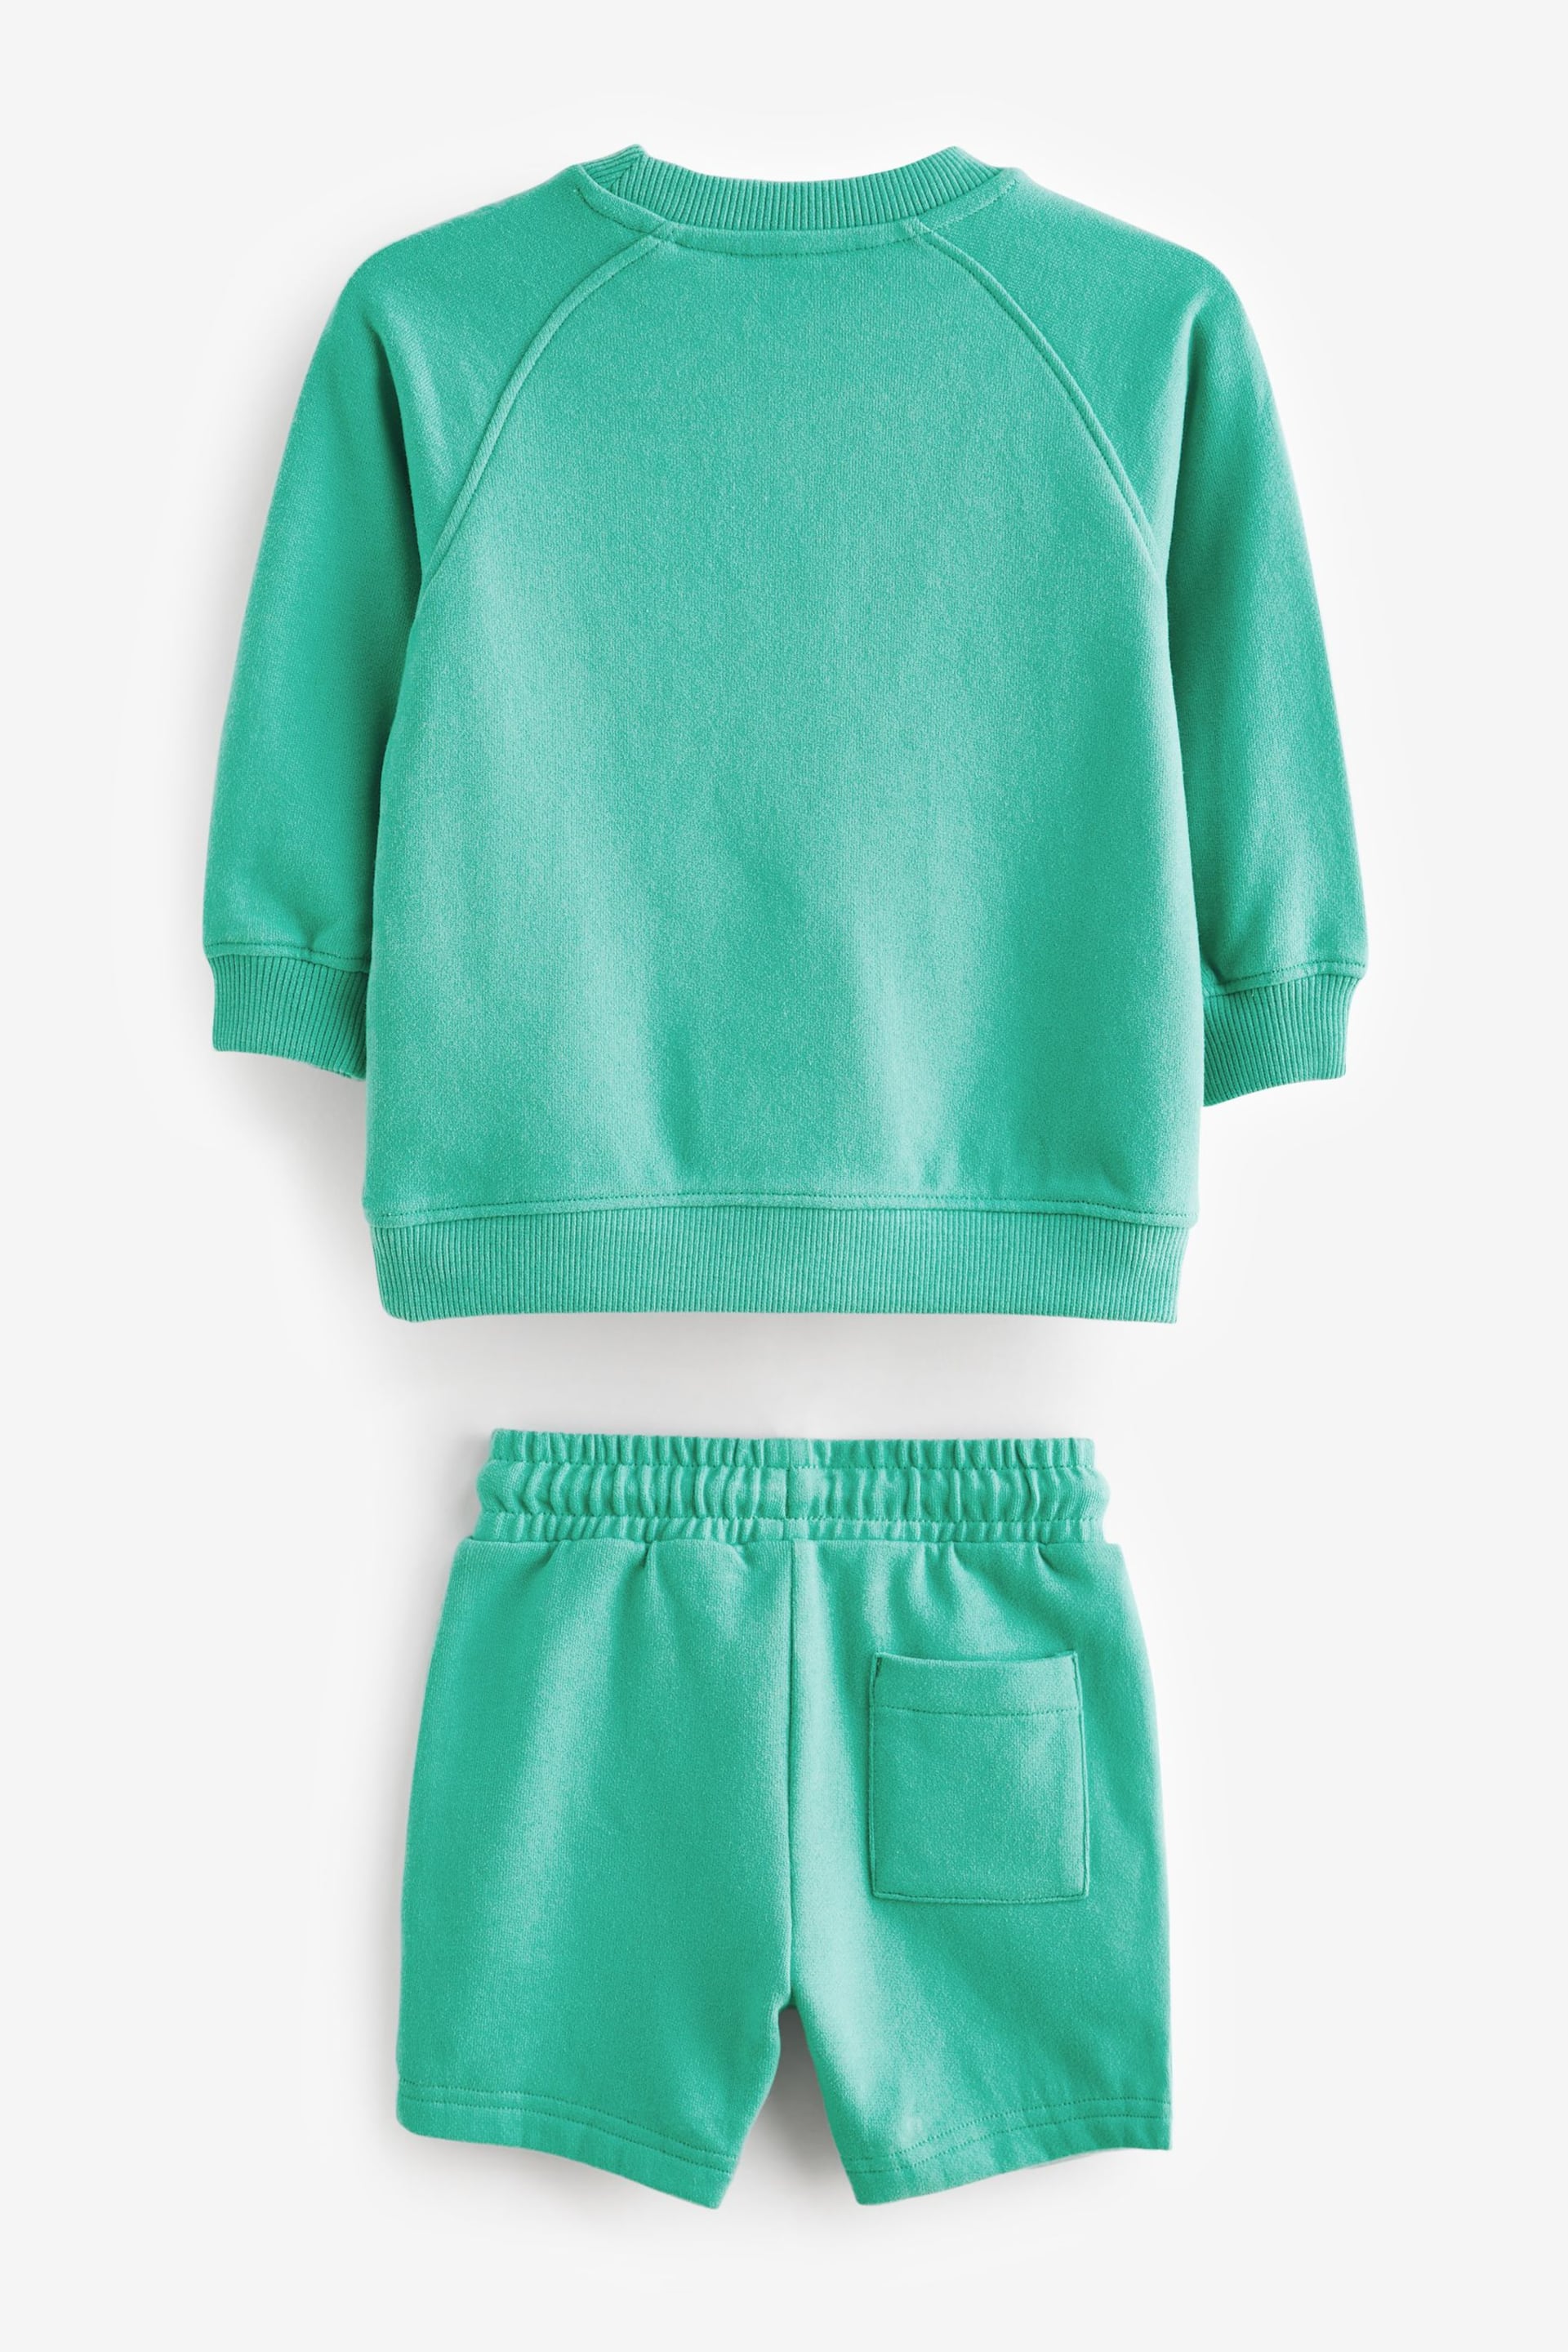 Mint Green Oversized Sweatshirt and Shorts Set (3mths-7yrs) - Image 5 of 6